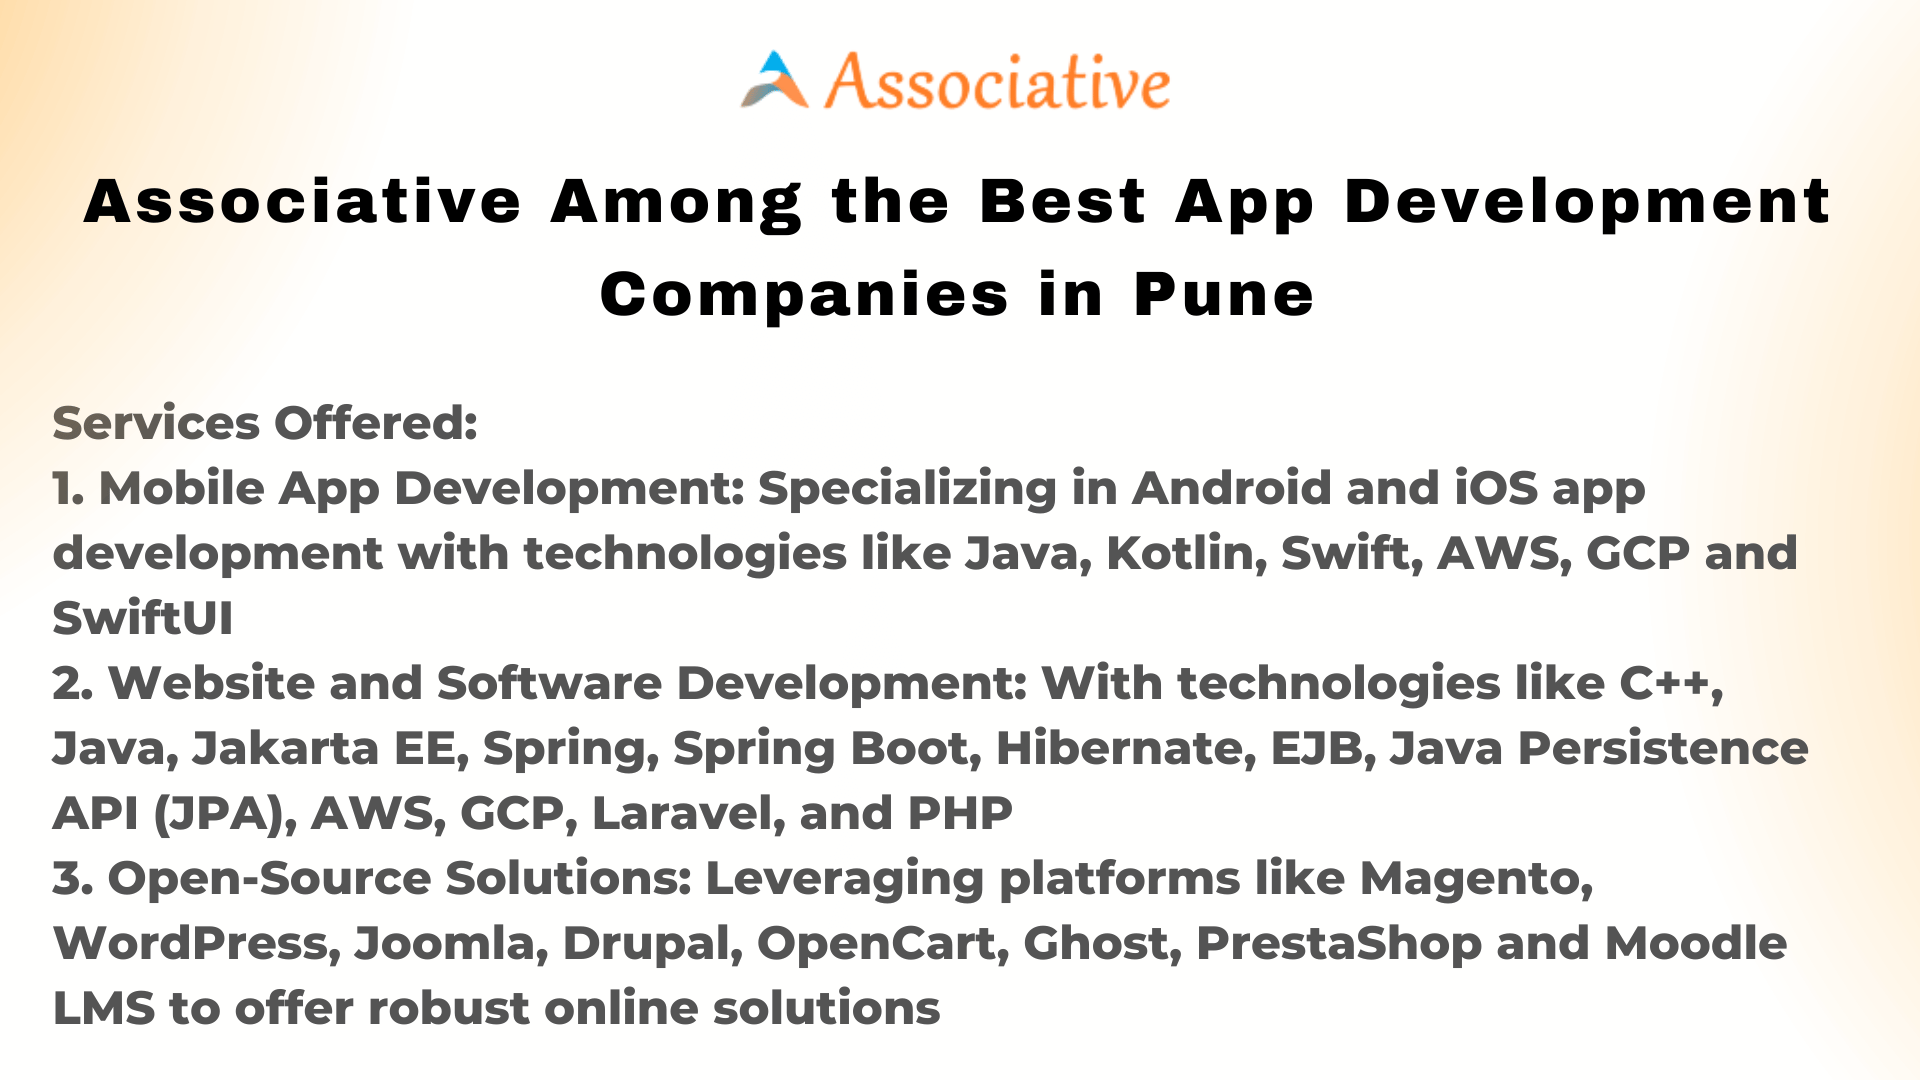 Associative Among the Best App Development Companies in Pune